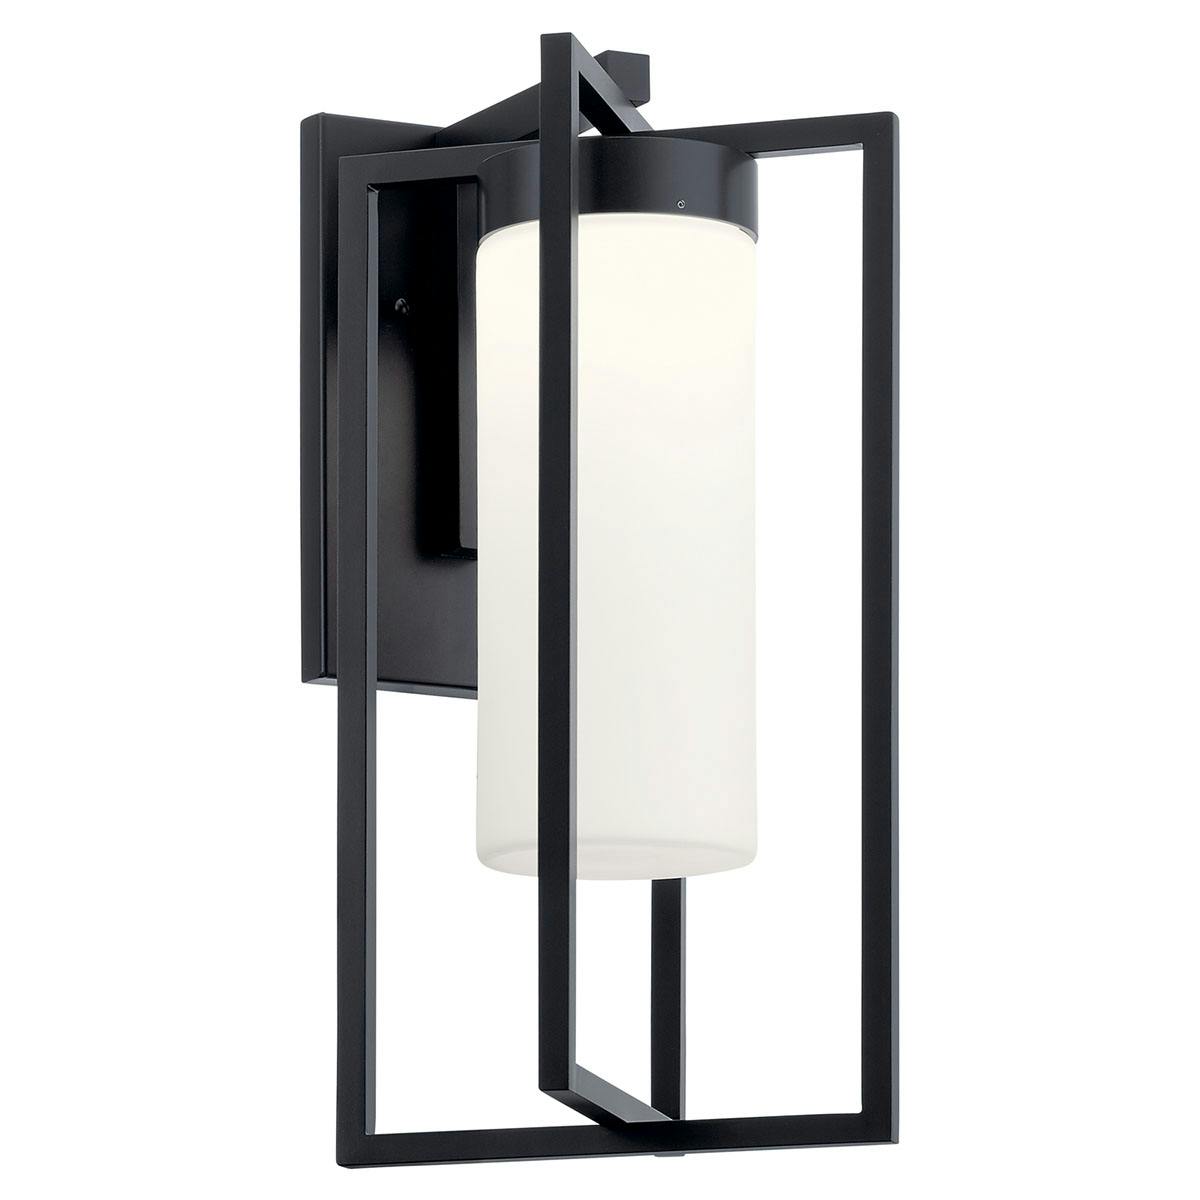 Drega 22.5" 1 LED Wall Light Black on a white background